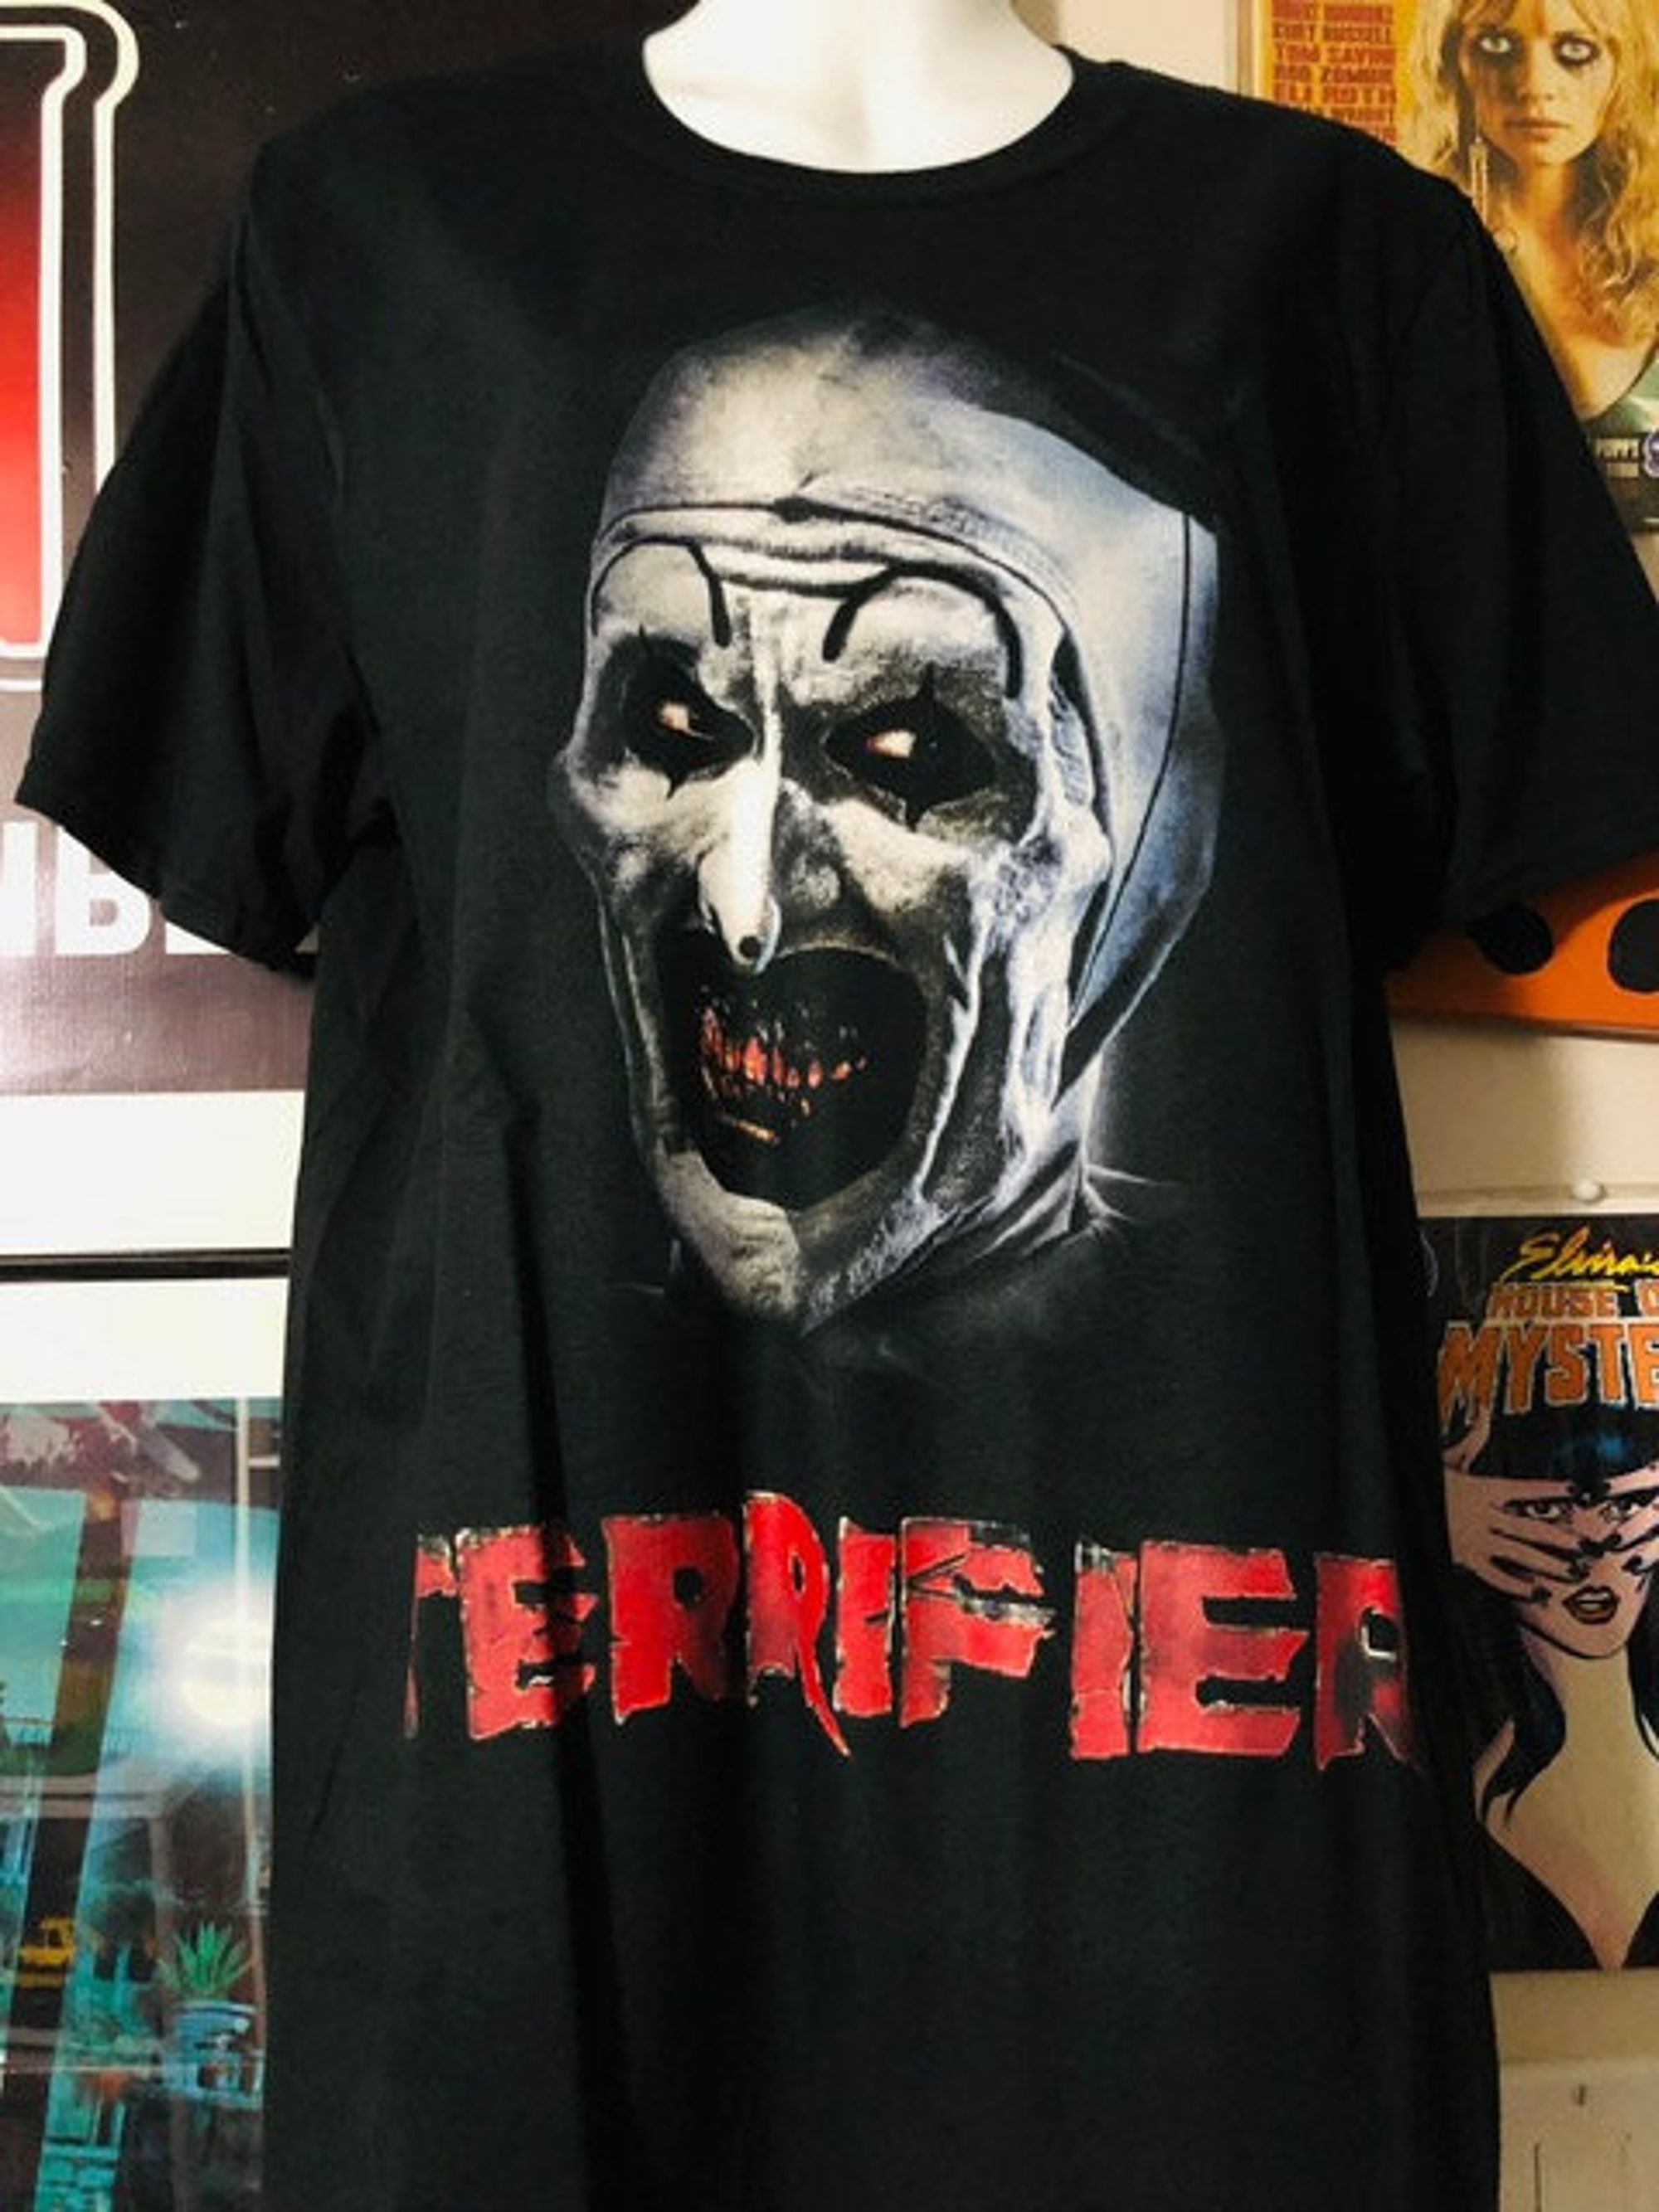 Terrifier Large Horror Movie T-Shirt